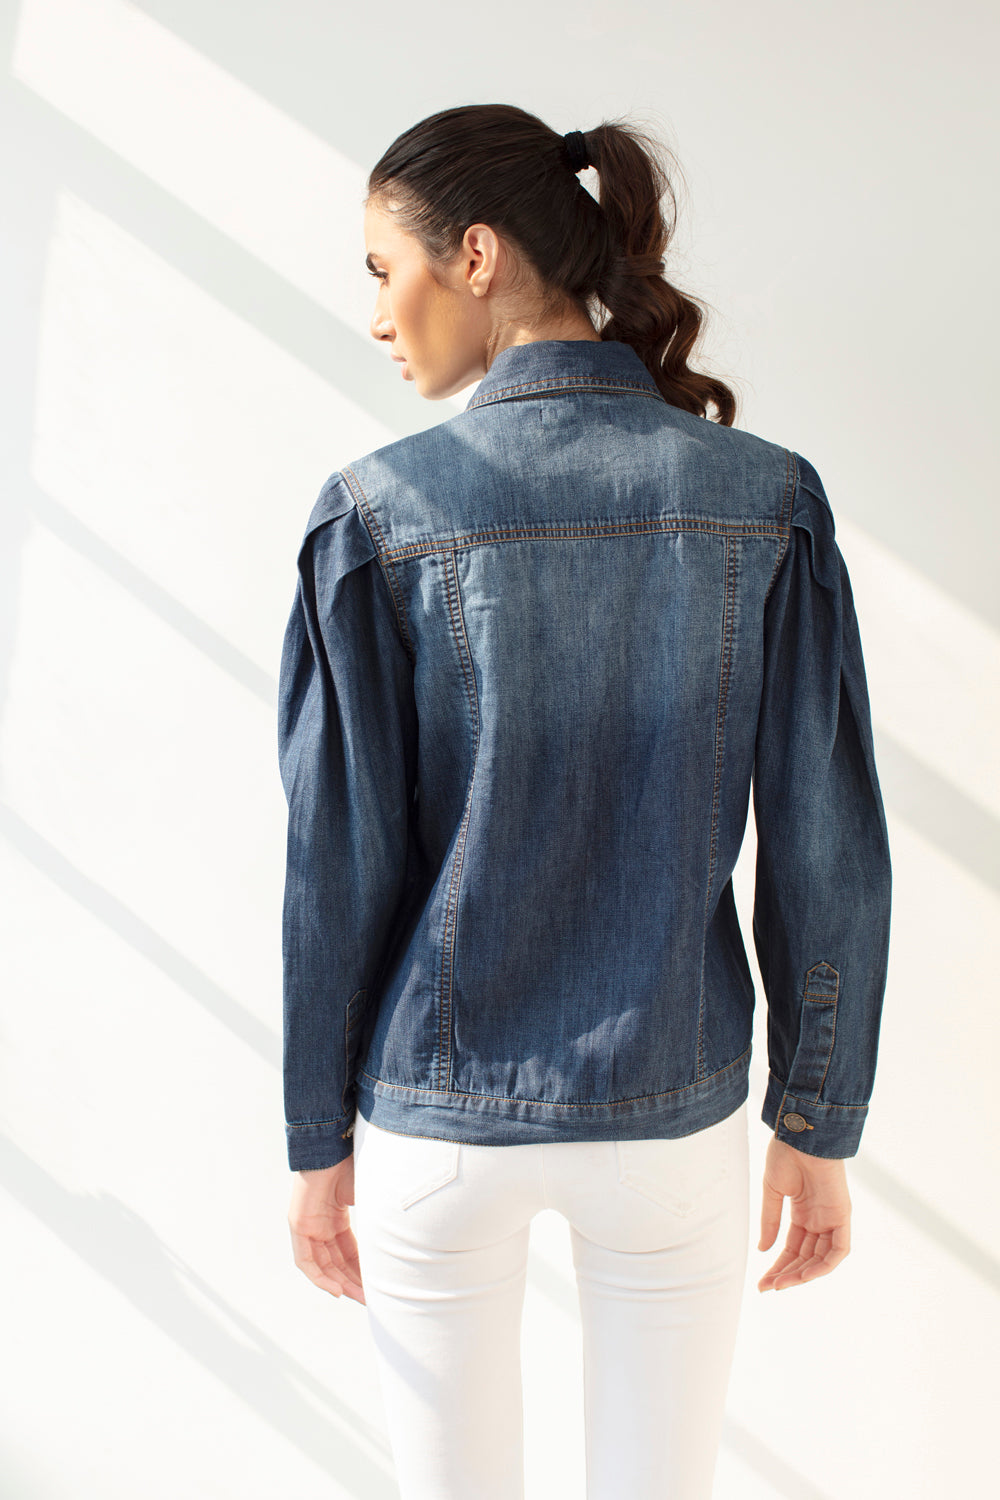 Puff Sleeve Denim Jacket - Light Wash Jean Jacket | Dry run, Denim jacket,  Jackets